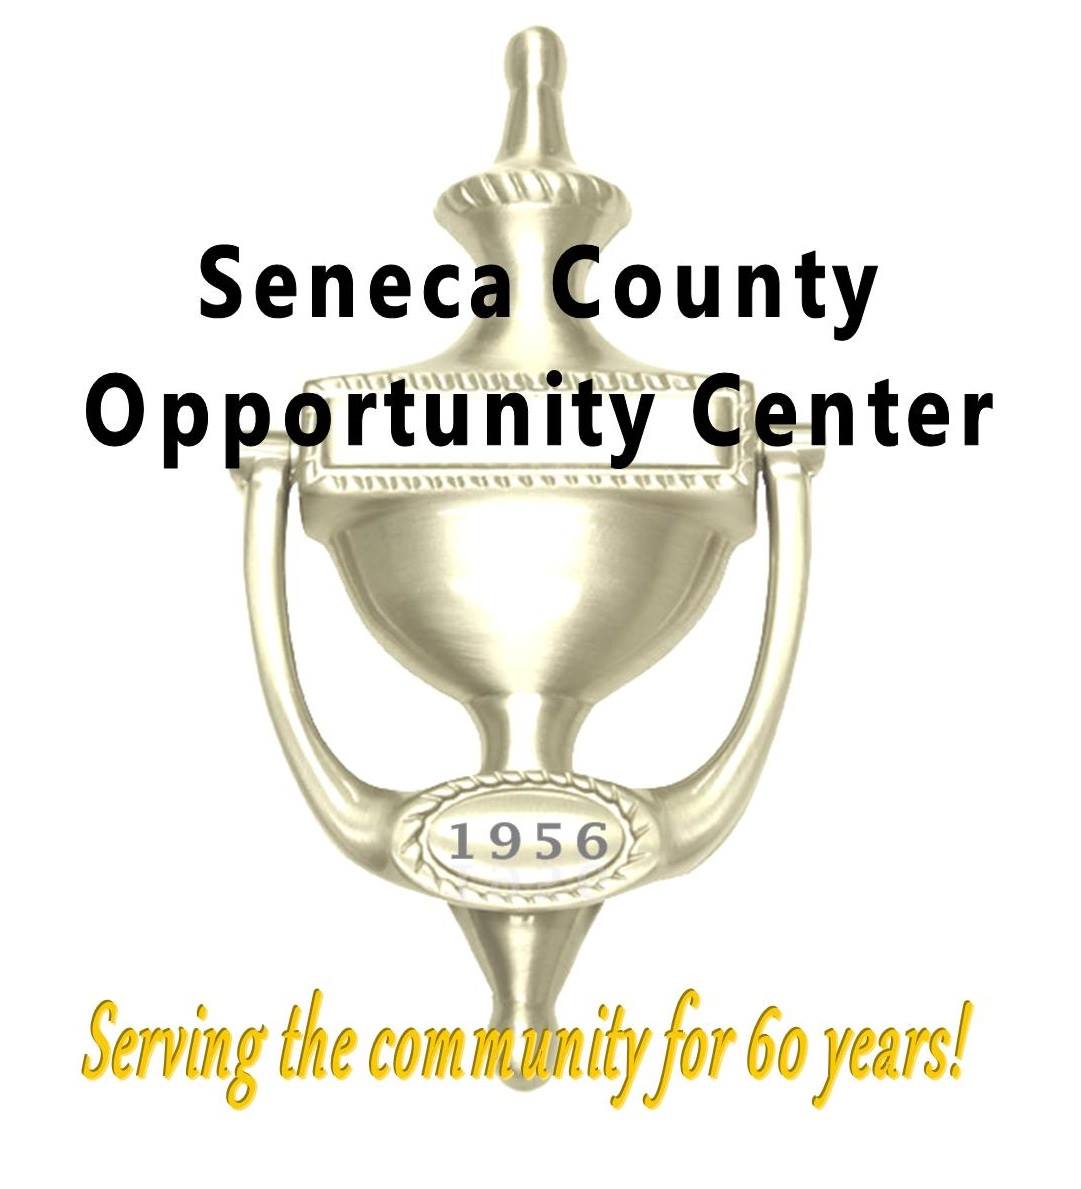 Seneca County Board of DD